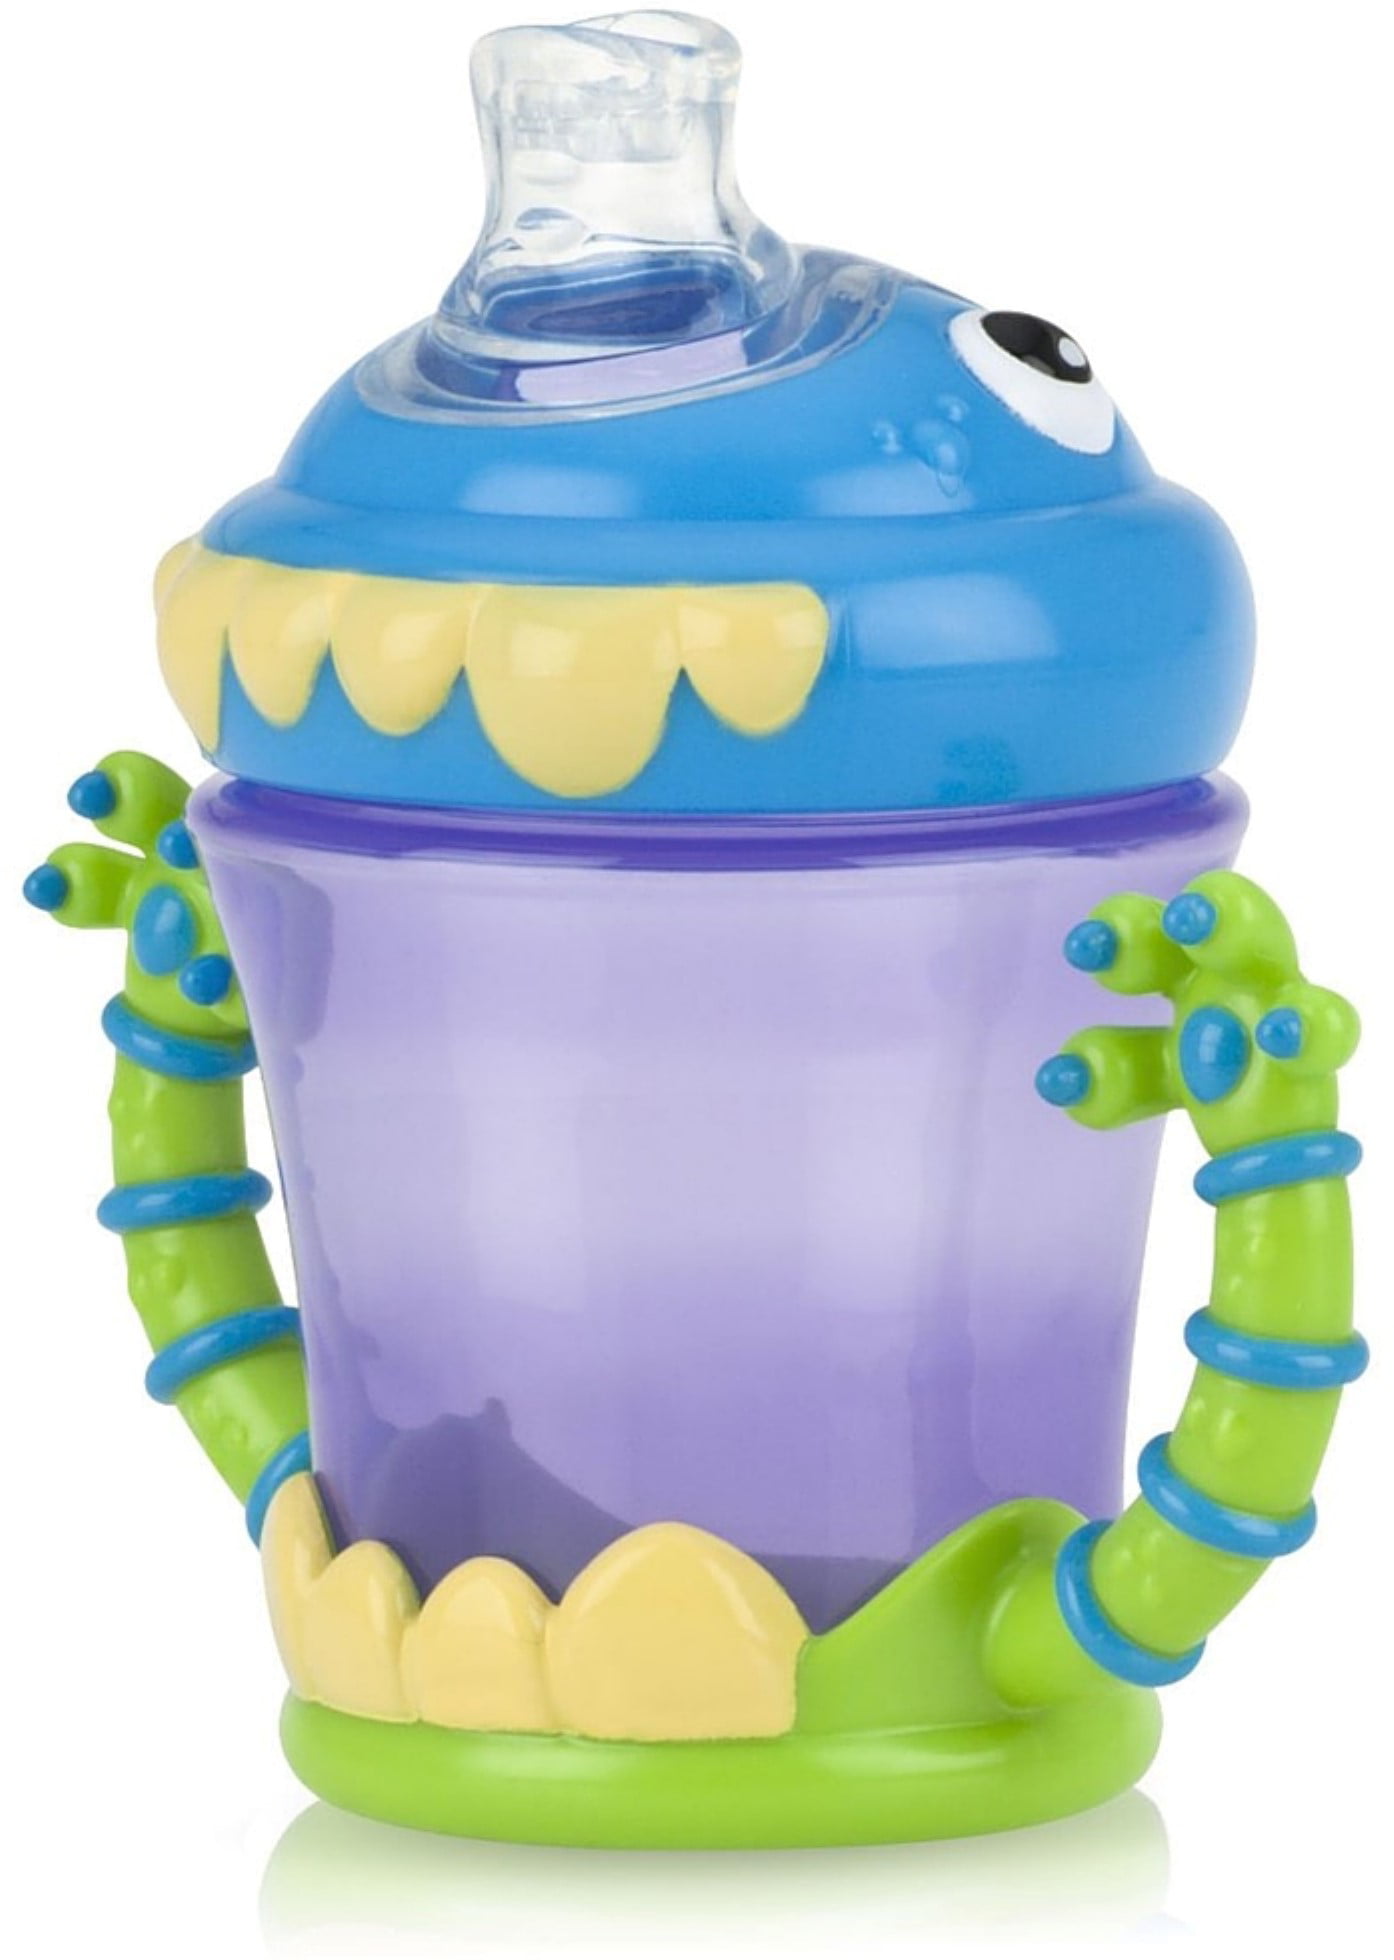 1 Bowl Nuby Fun Colored Plastic Baby Fun Feeding Entertaining Colourful Bright 